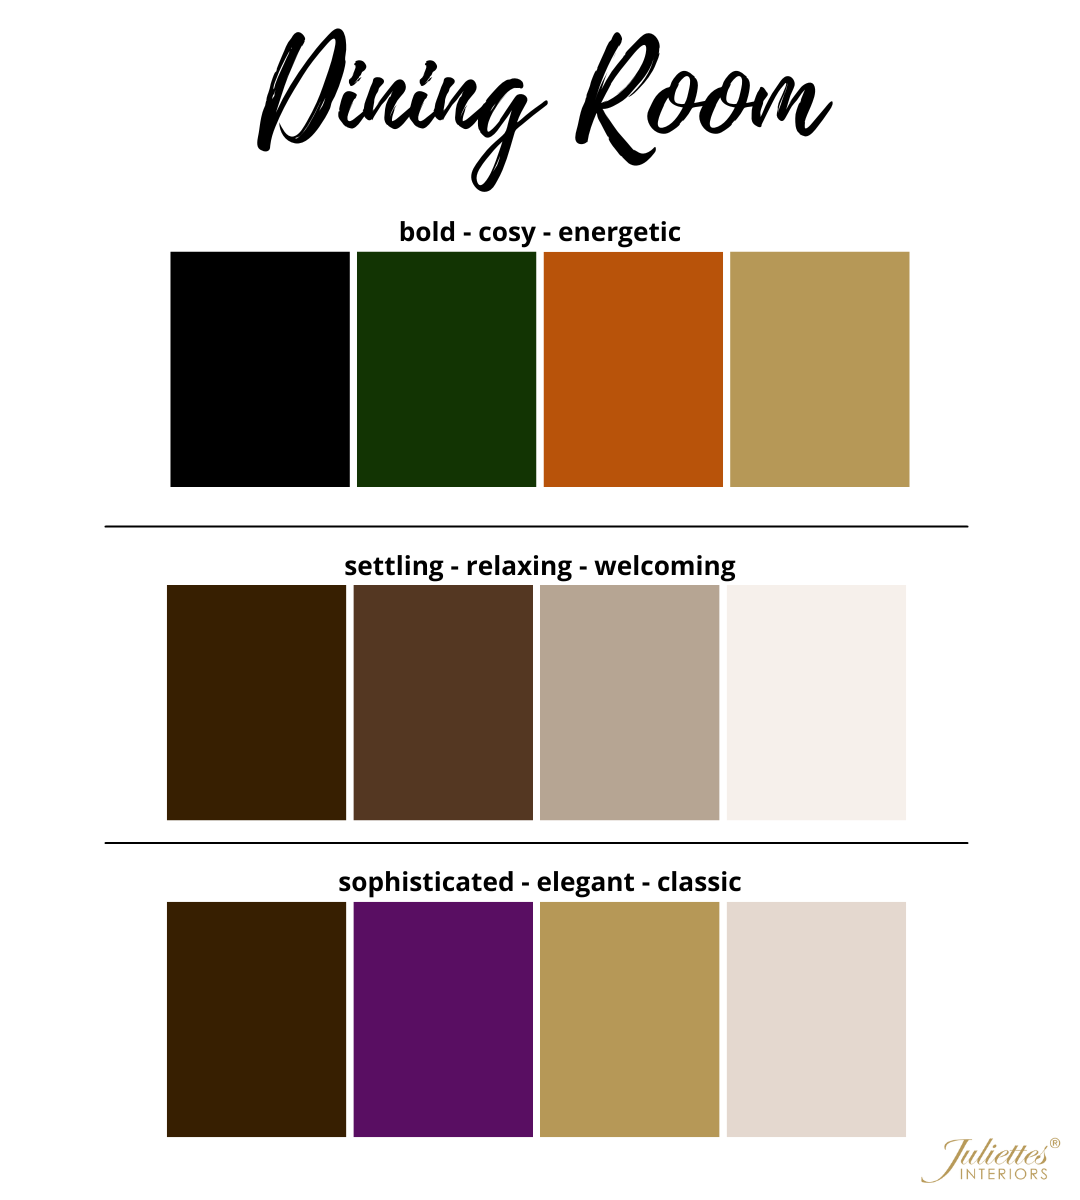 Dining Room home colour scheme palette 